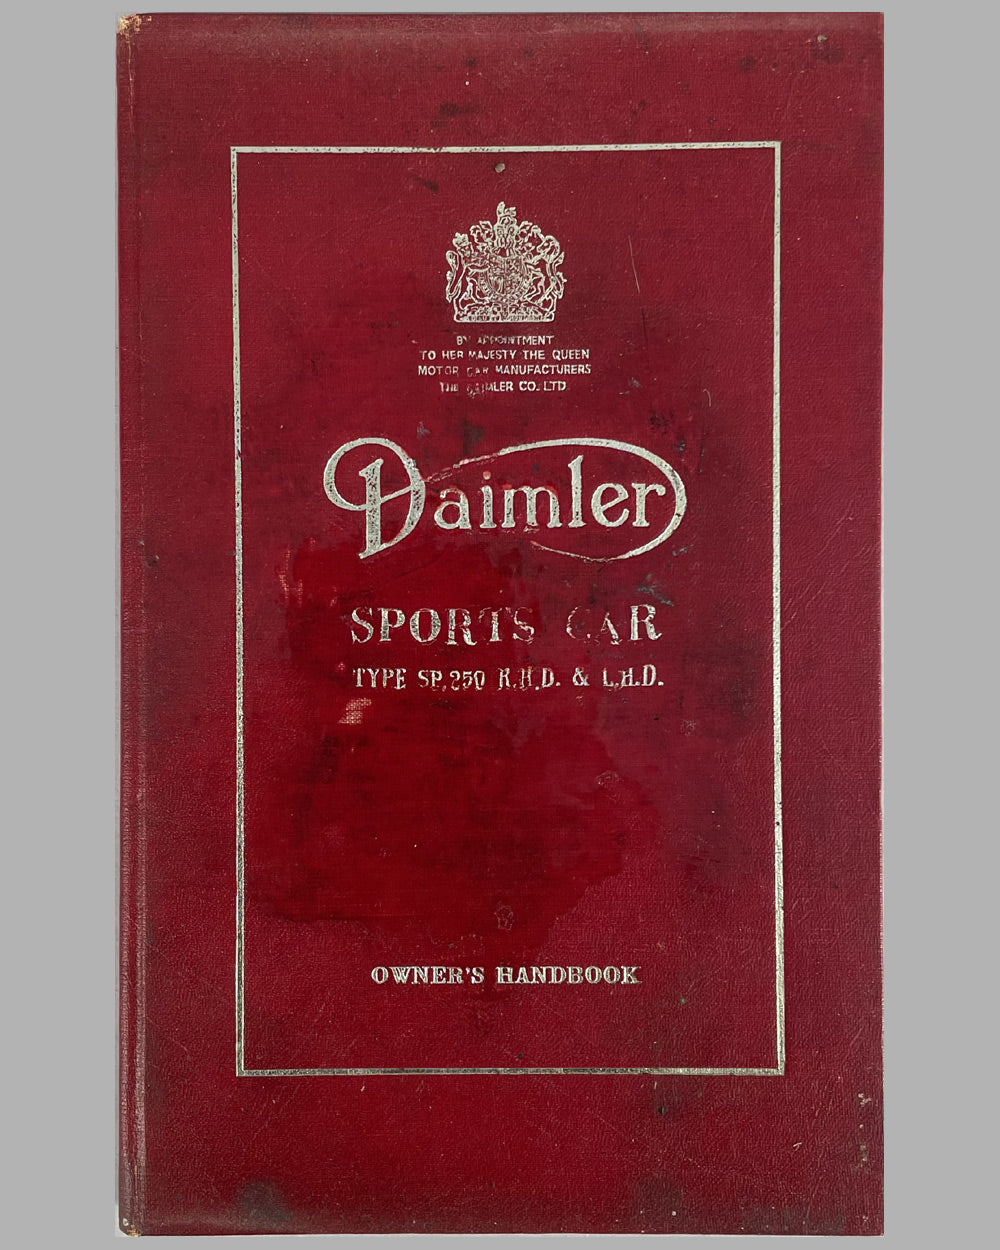 Daimler Sports Car SP 250 factory owner’s handbook, 1959